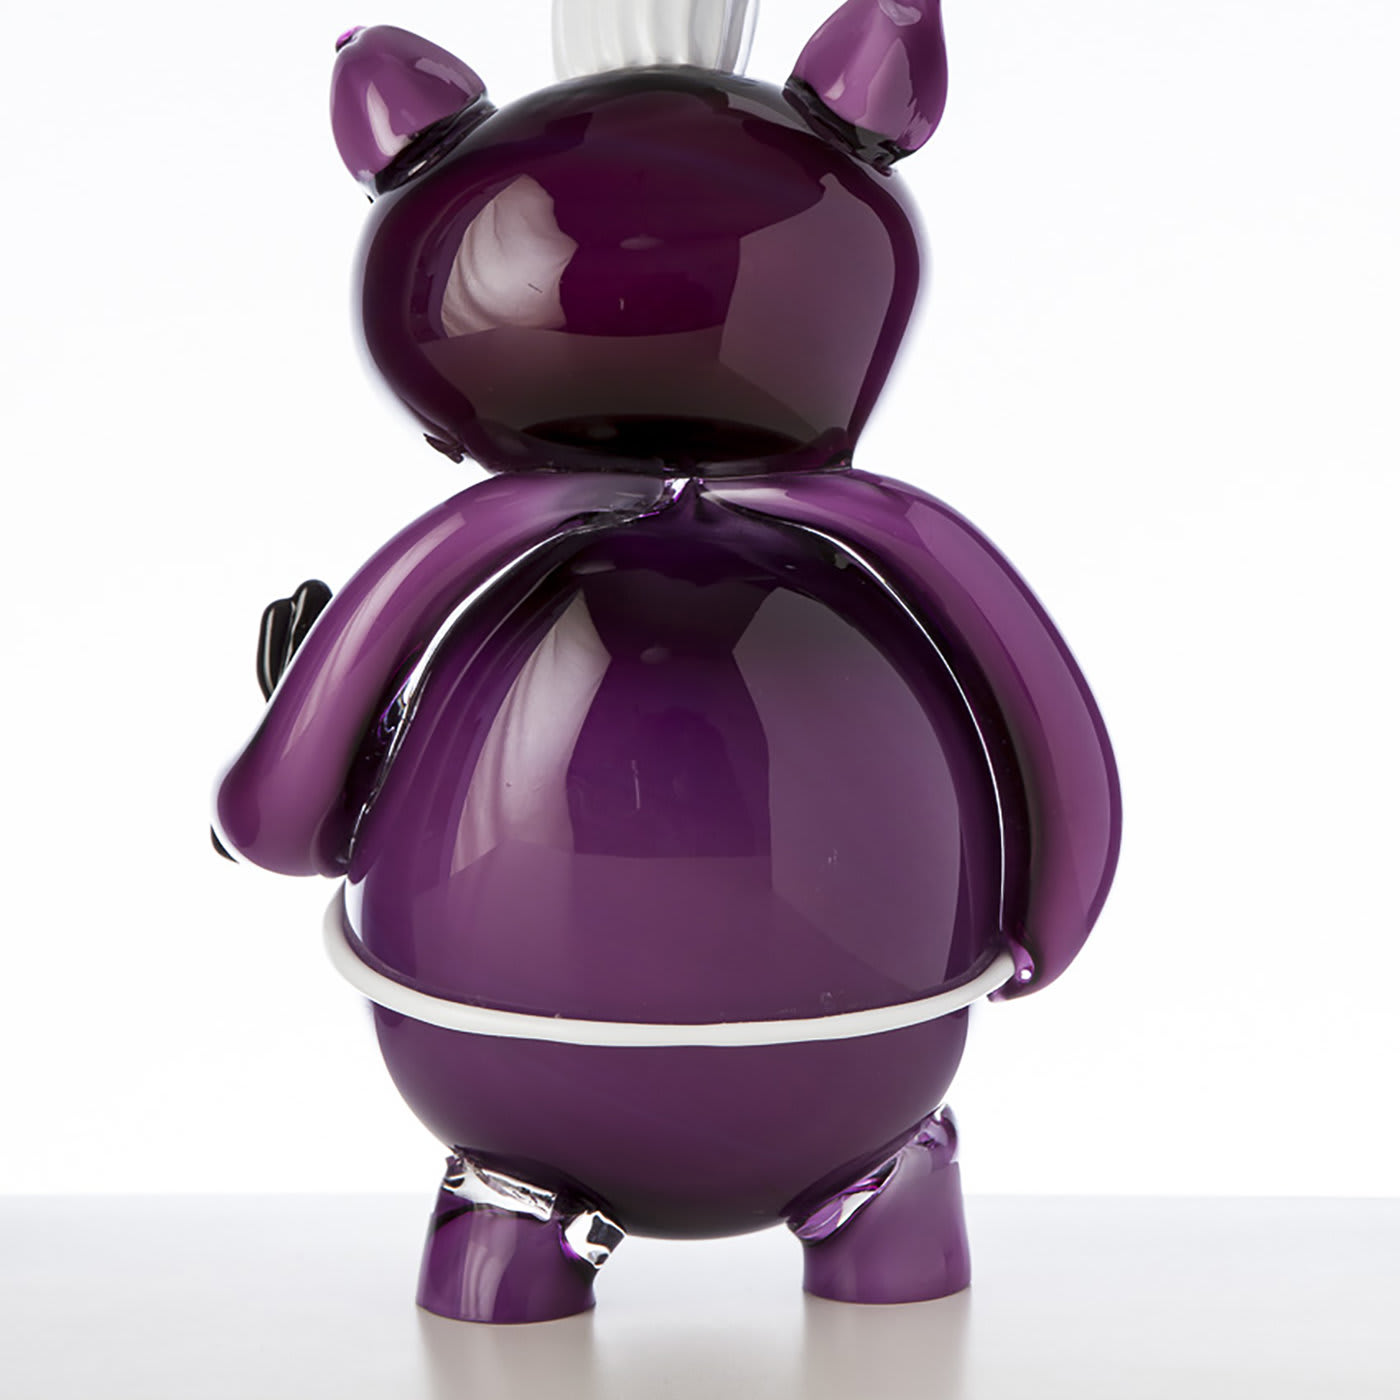 Chef Pig Pop Comic Sculpture - Wave Murano Glass by Roberto Beltrami